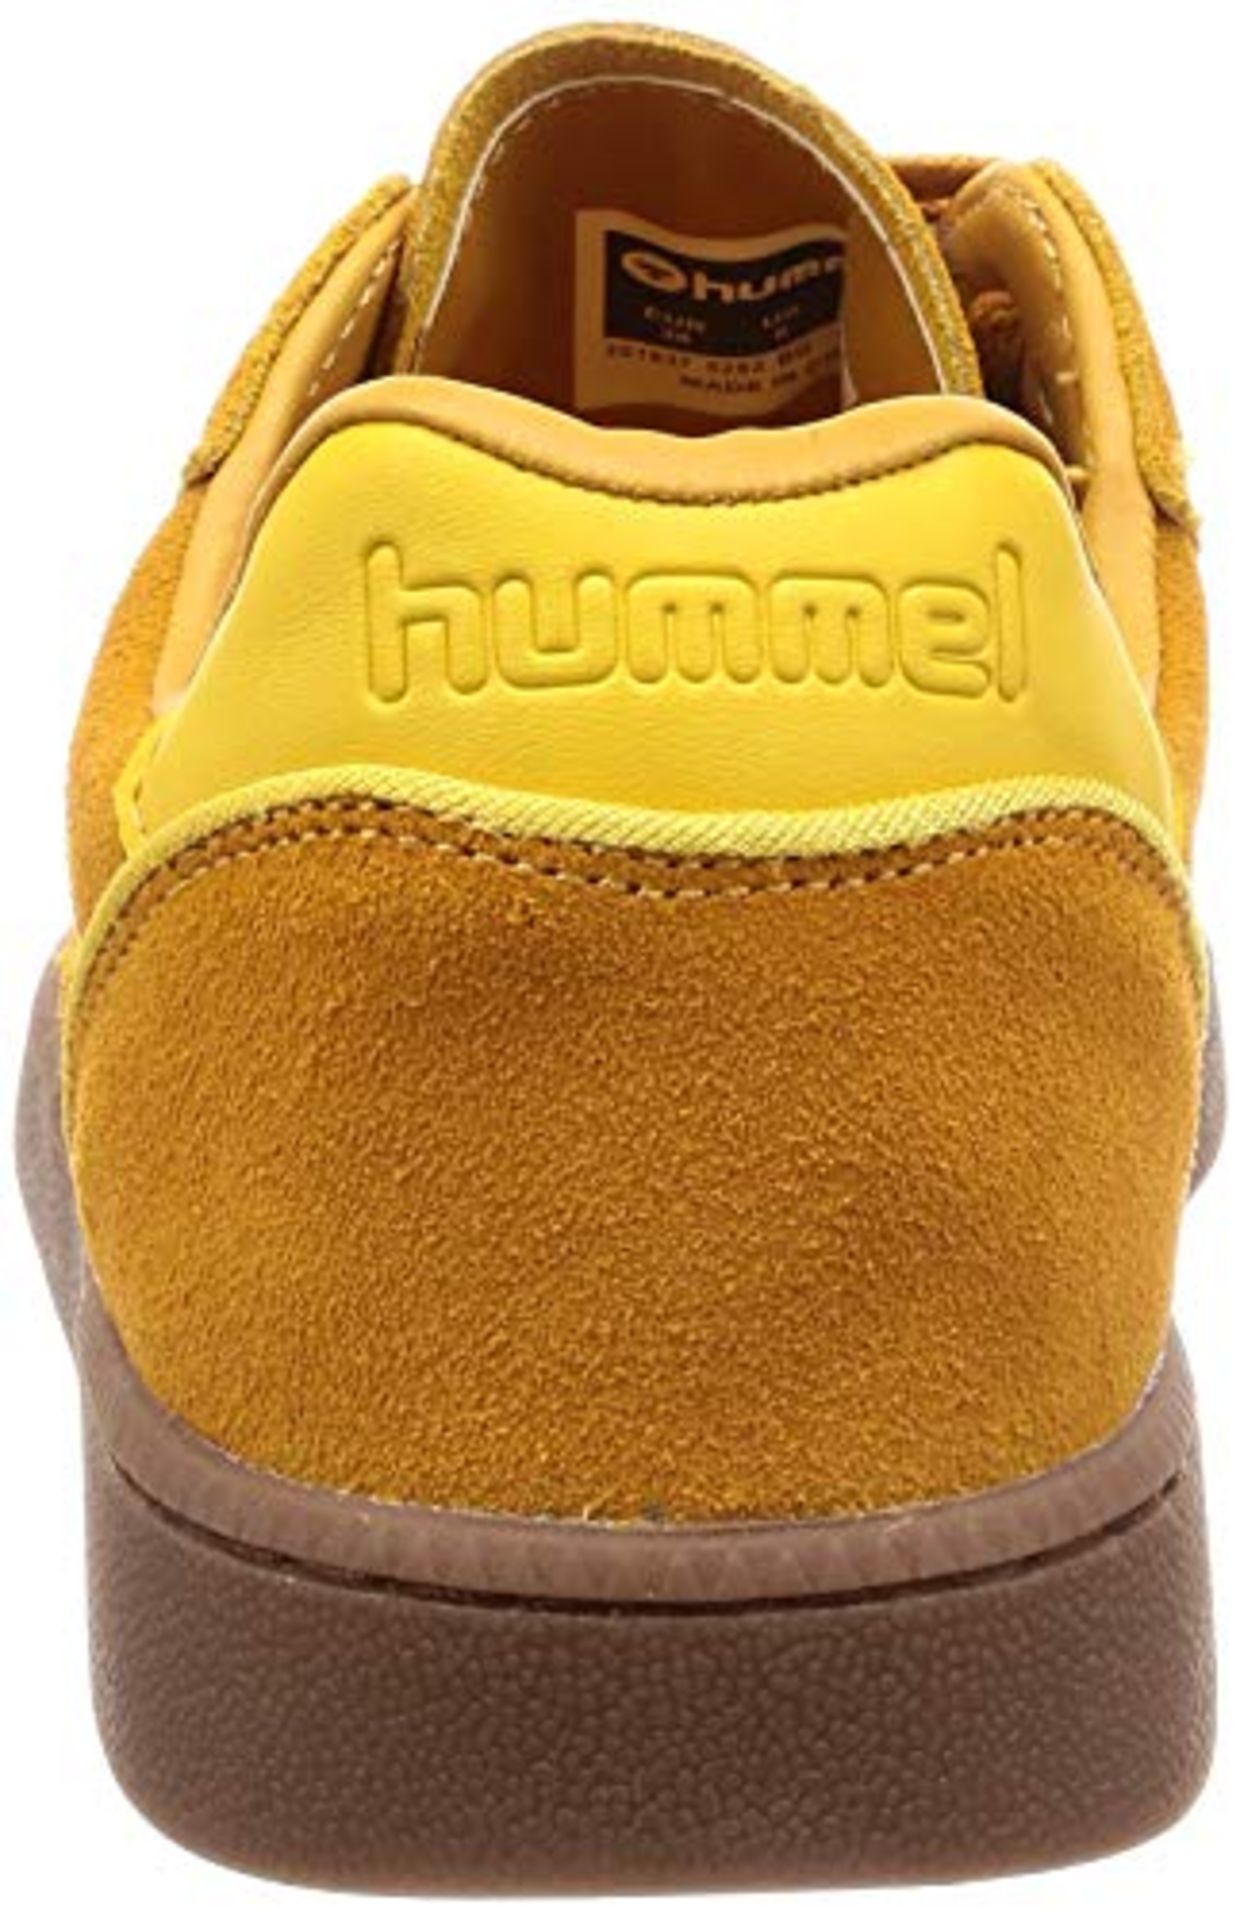 1 x hummel Team Shoes Yellow HB, HM201937, Sunflower, 42 Size: 42 EU | EAN: 5700494865820 - Image 2 of 8